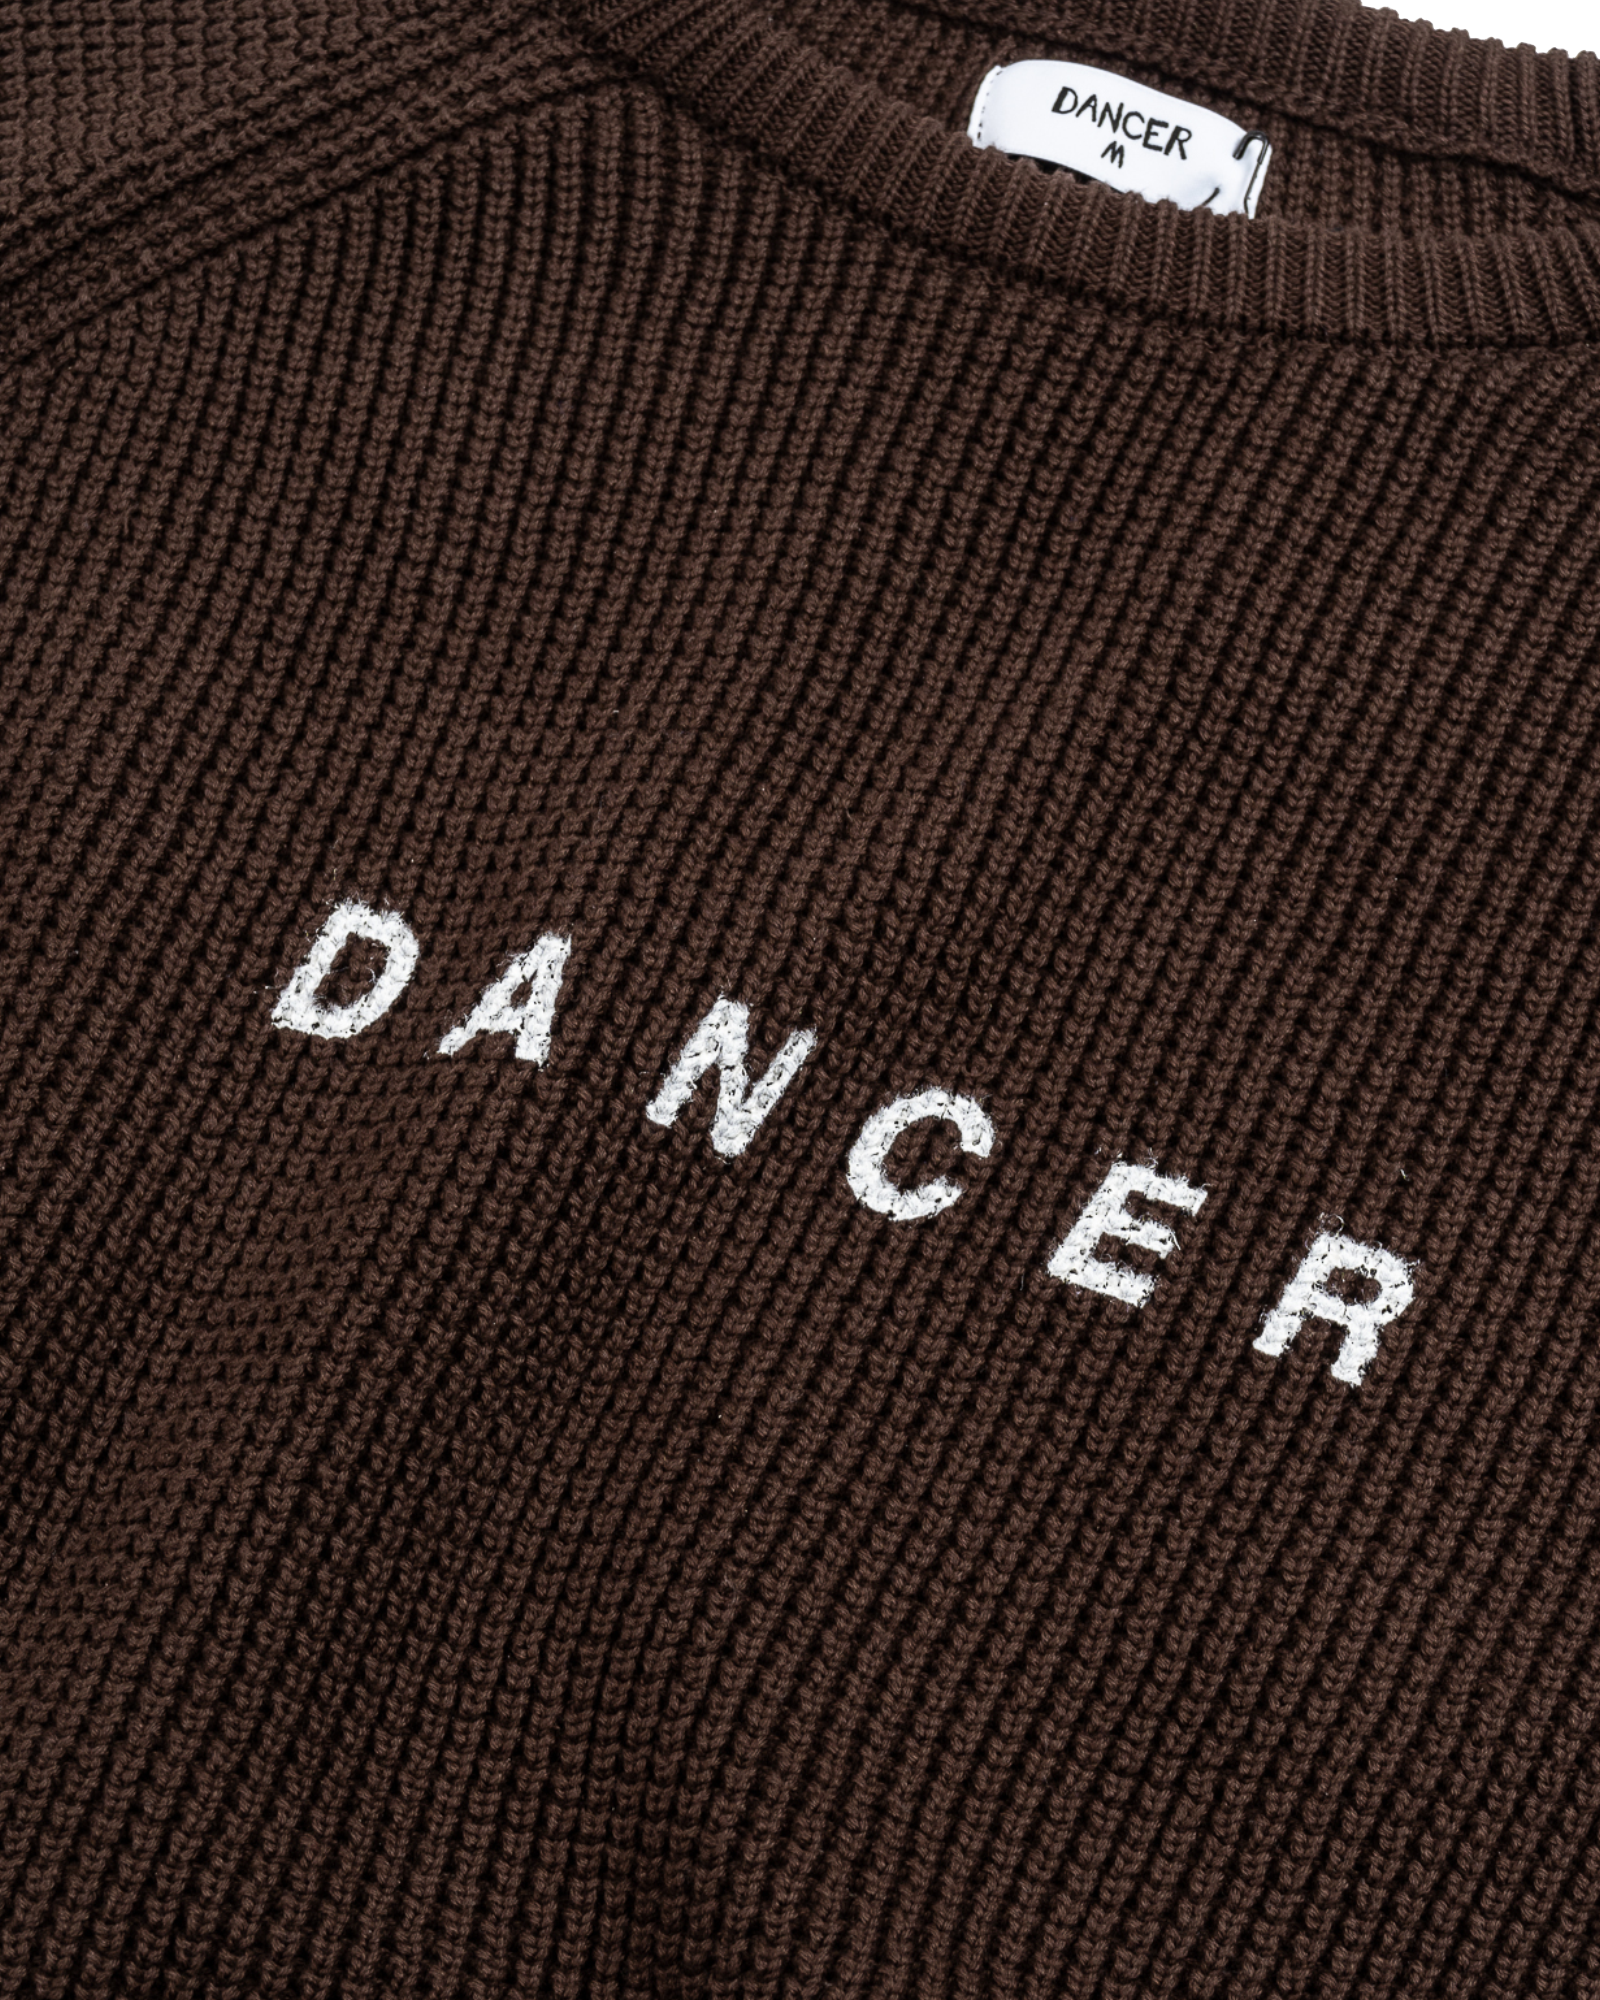 Dancer - Knit - Cotton - Knit - Brown